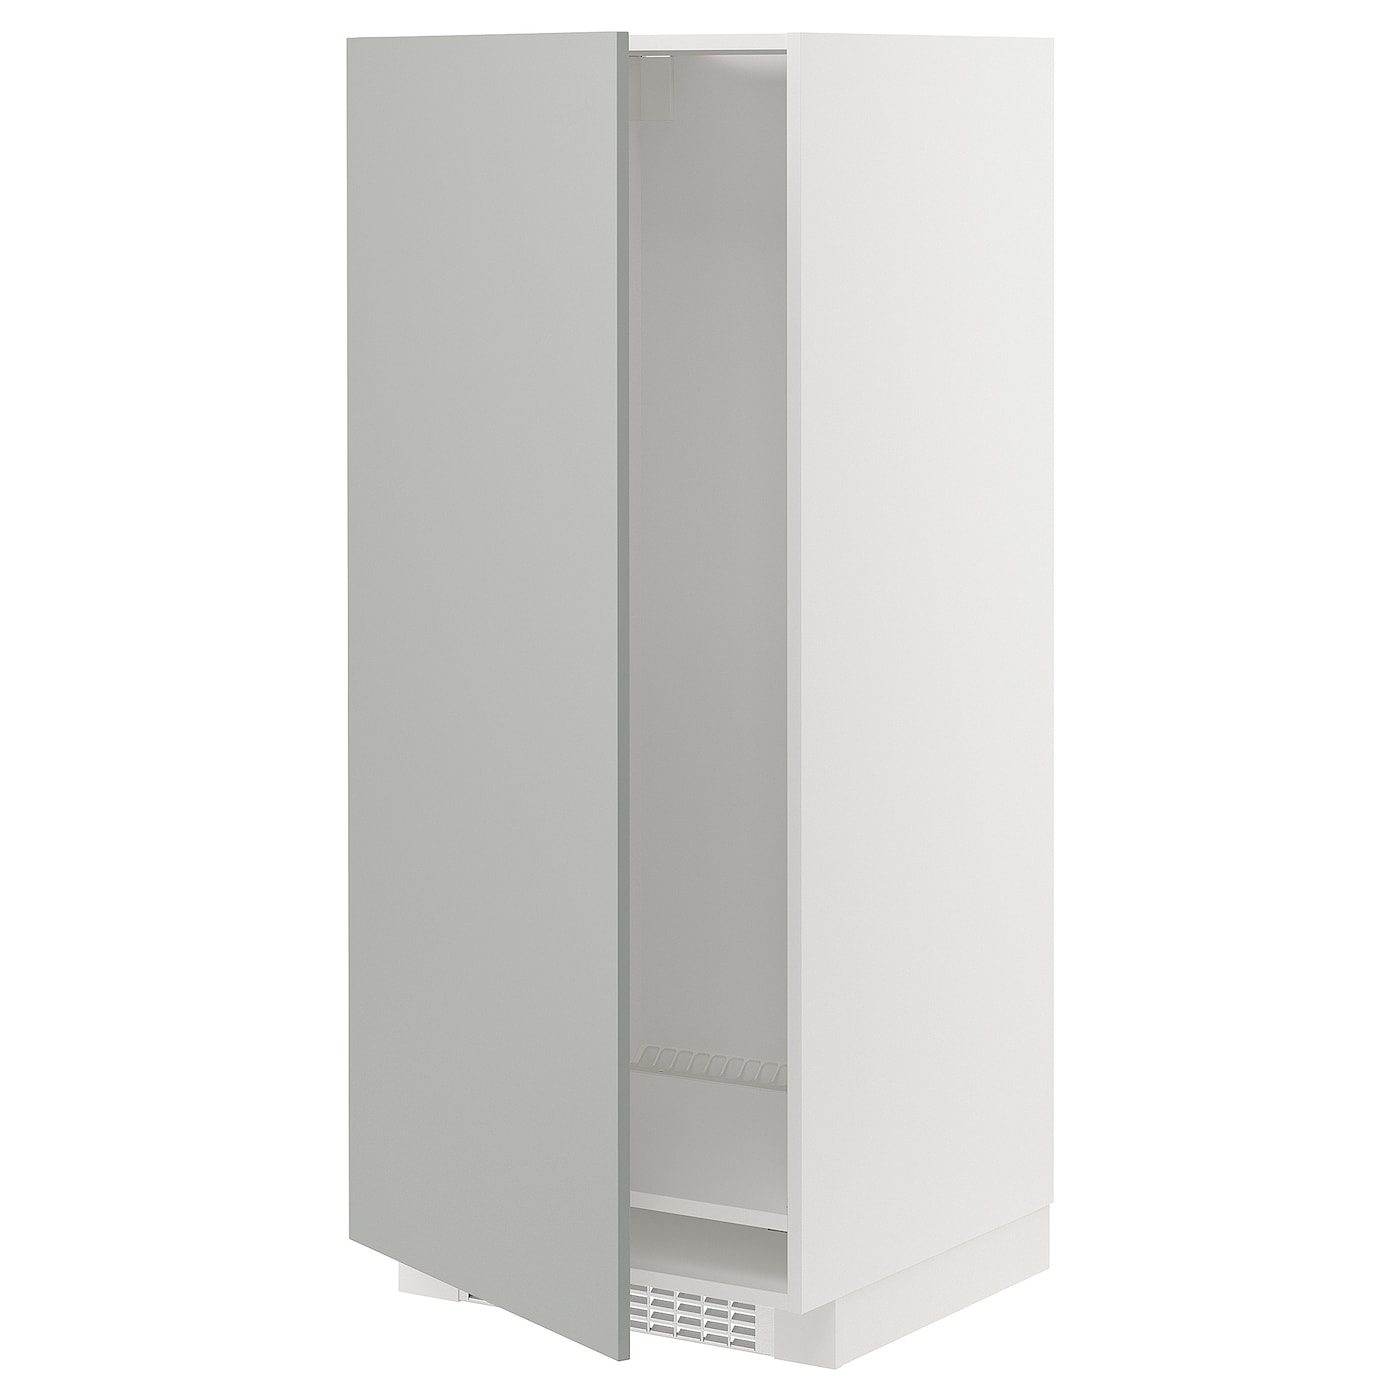 Высокий кухонный шкаф - IKEA METOD/МЕТОД ИКЕА, 140х60х60 см, белый/серый